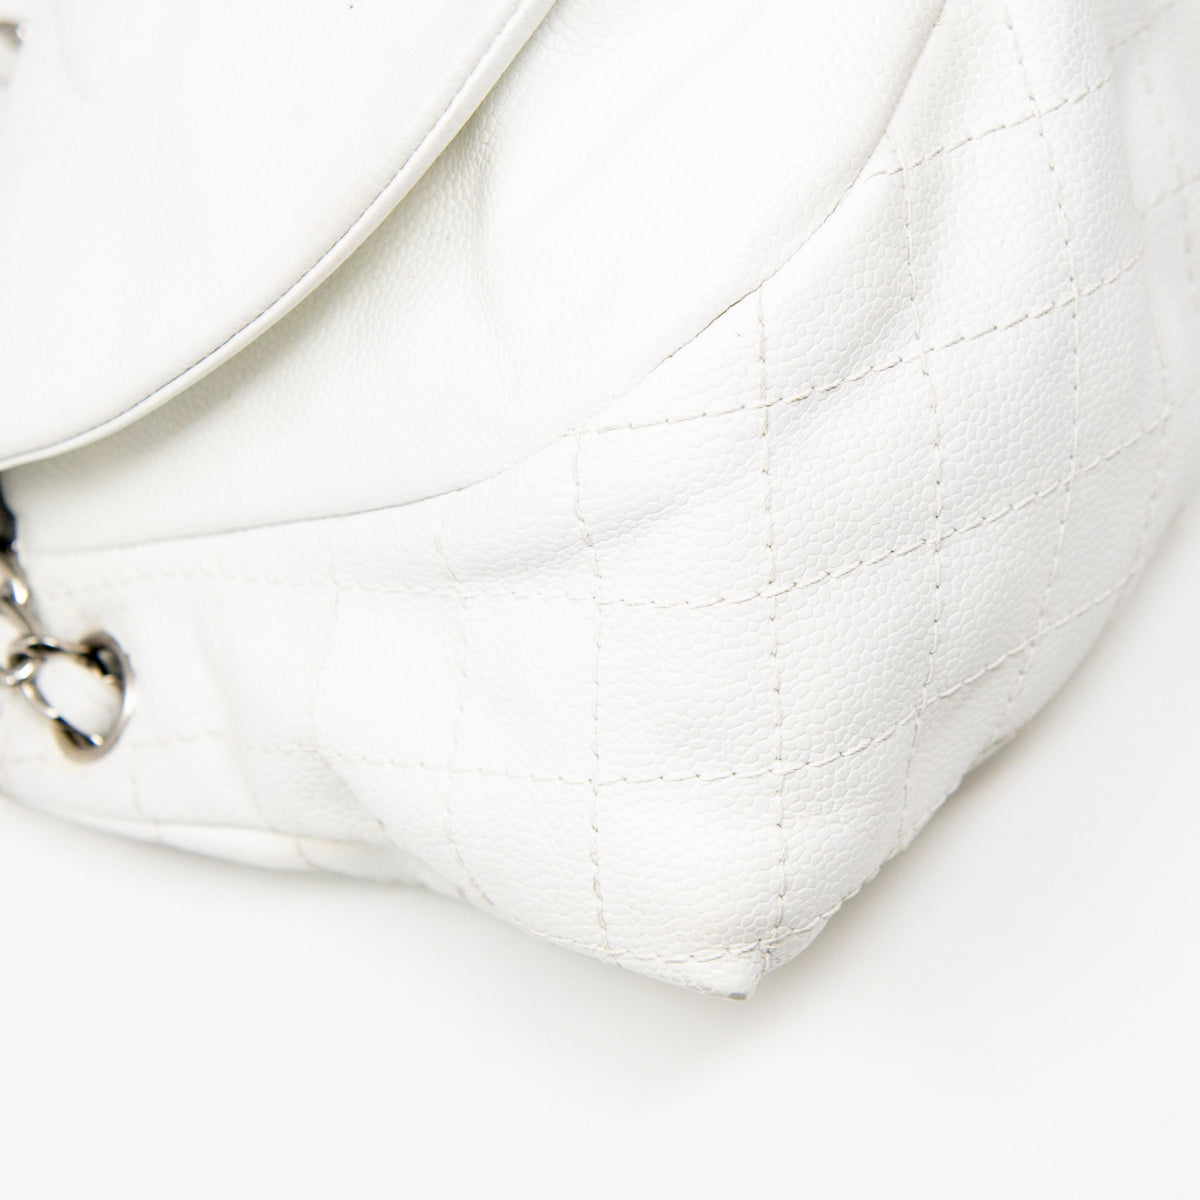 Chanel White Half Moon Bag